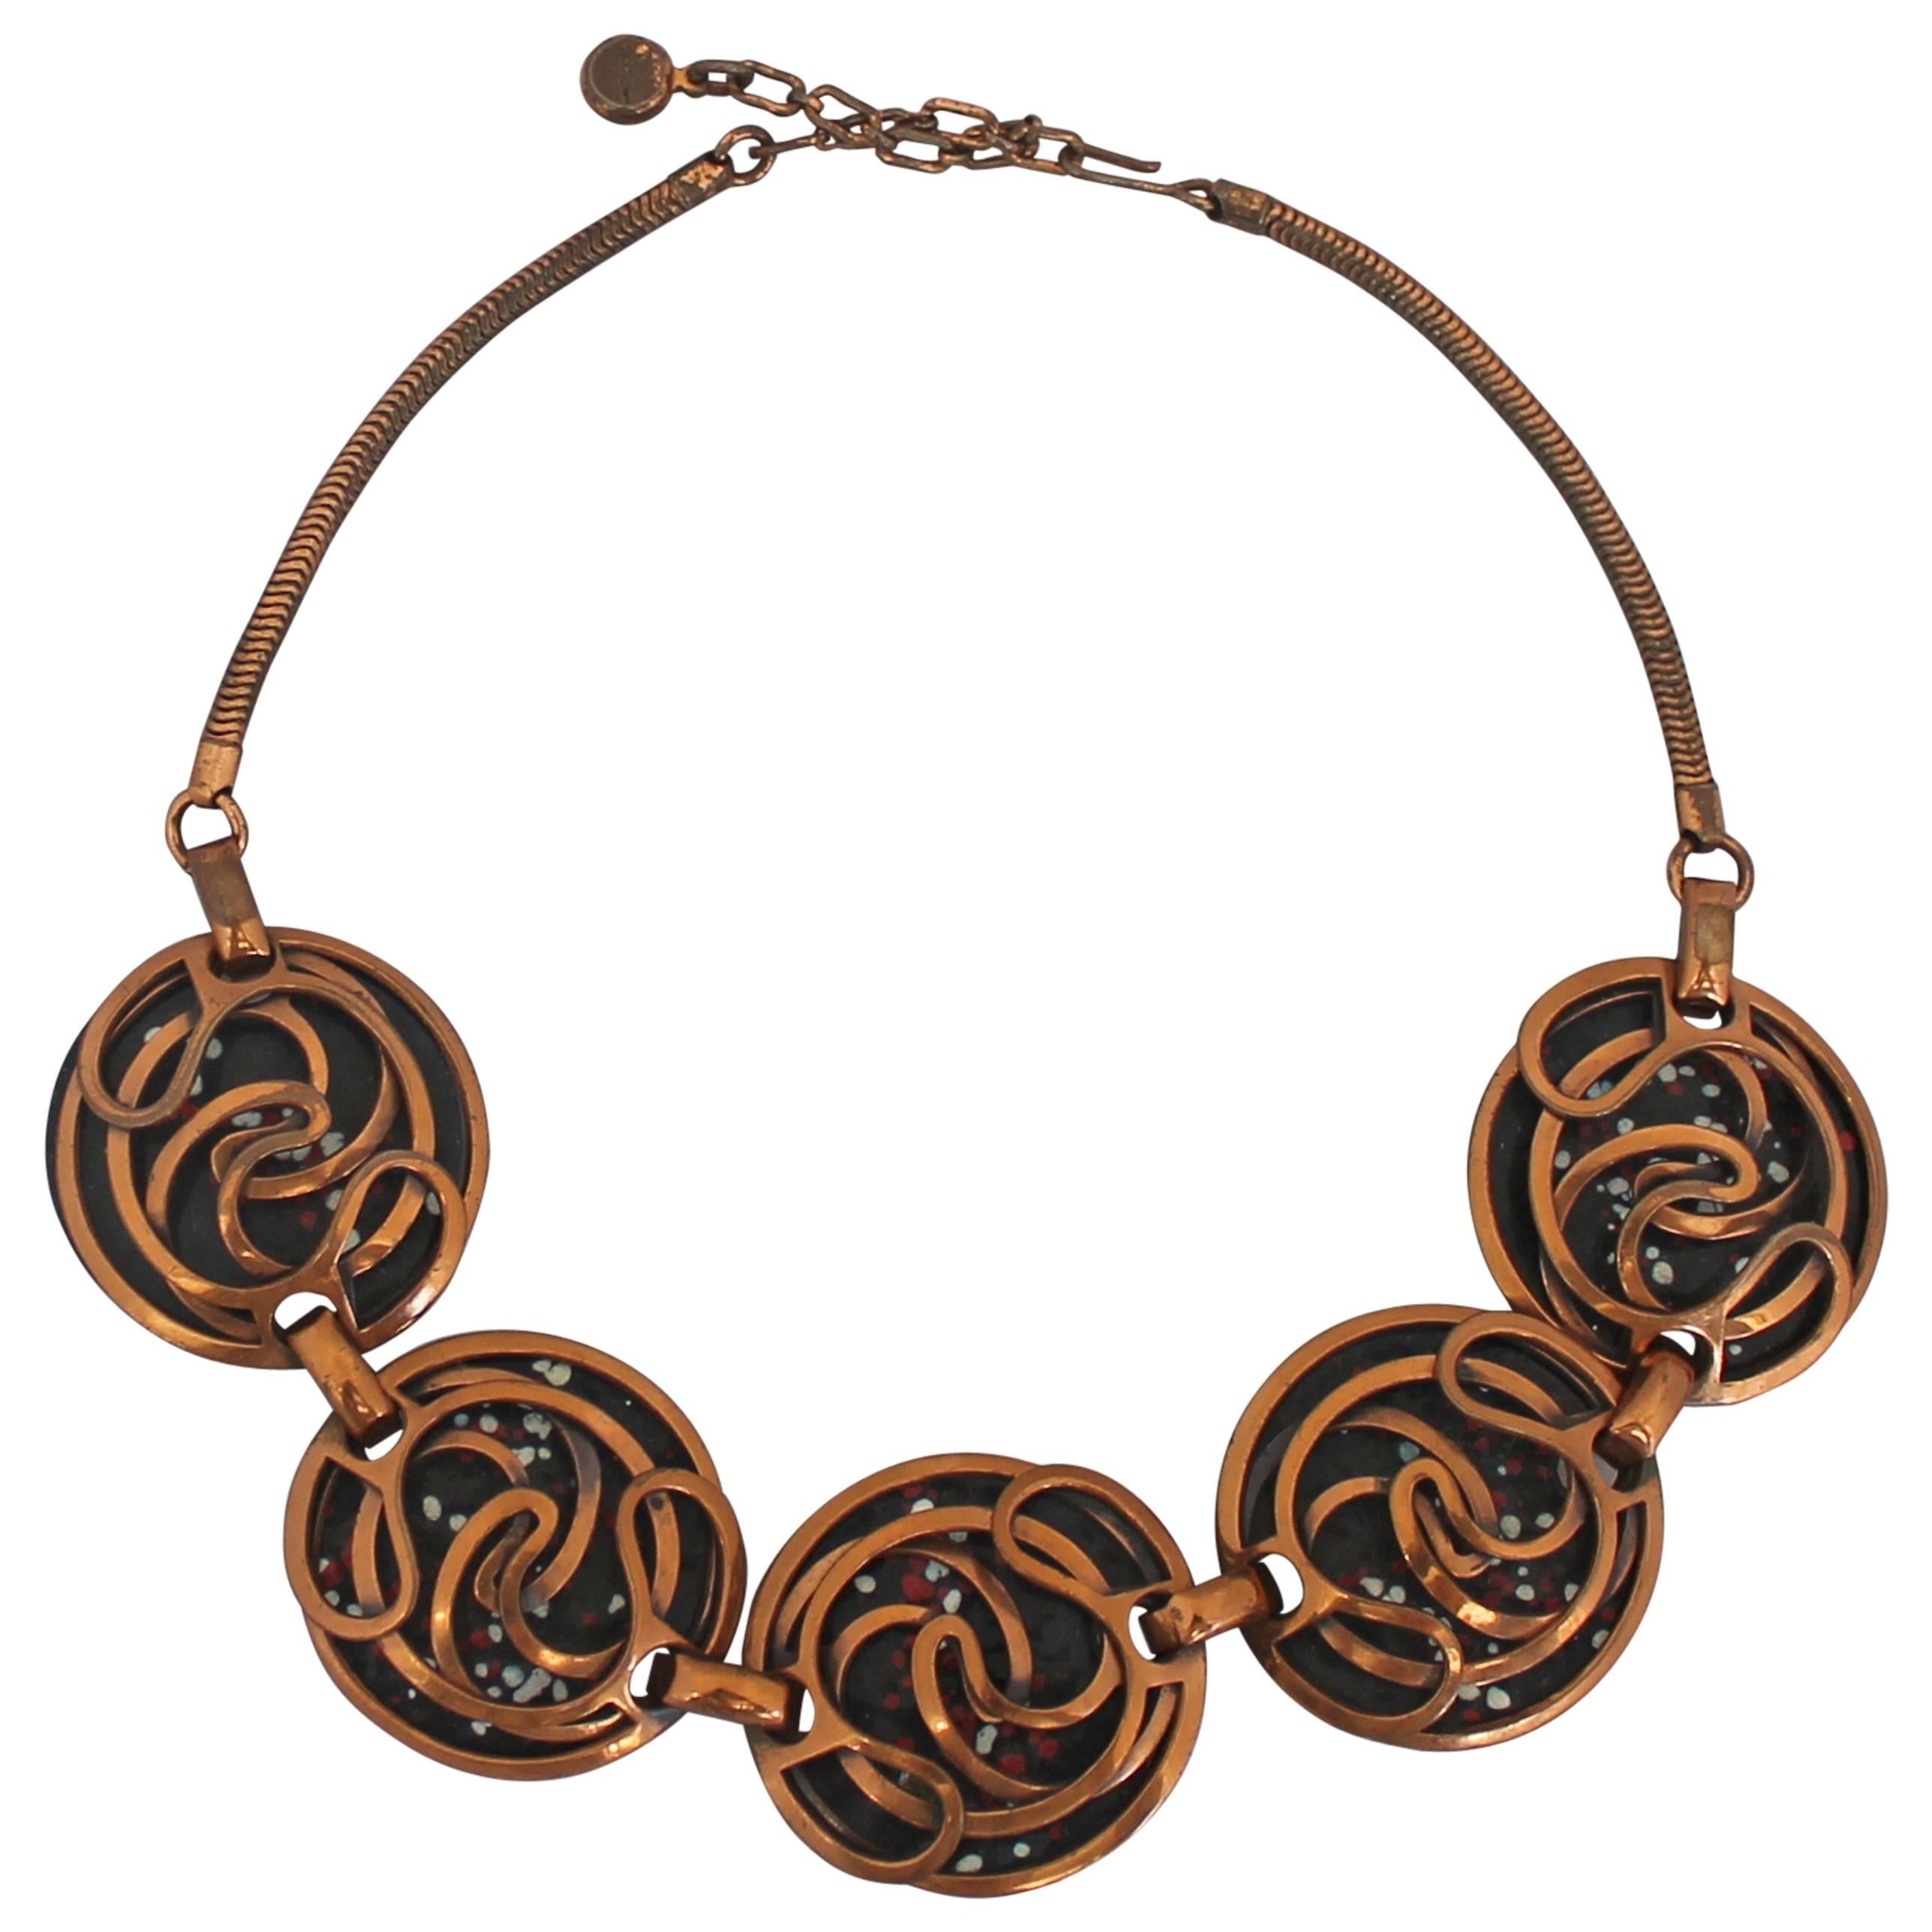 Rebajes Vintage Copper and Black Enamel Necklace w/ Swirl Design - circa 1950's